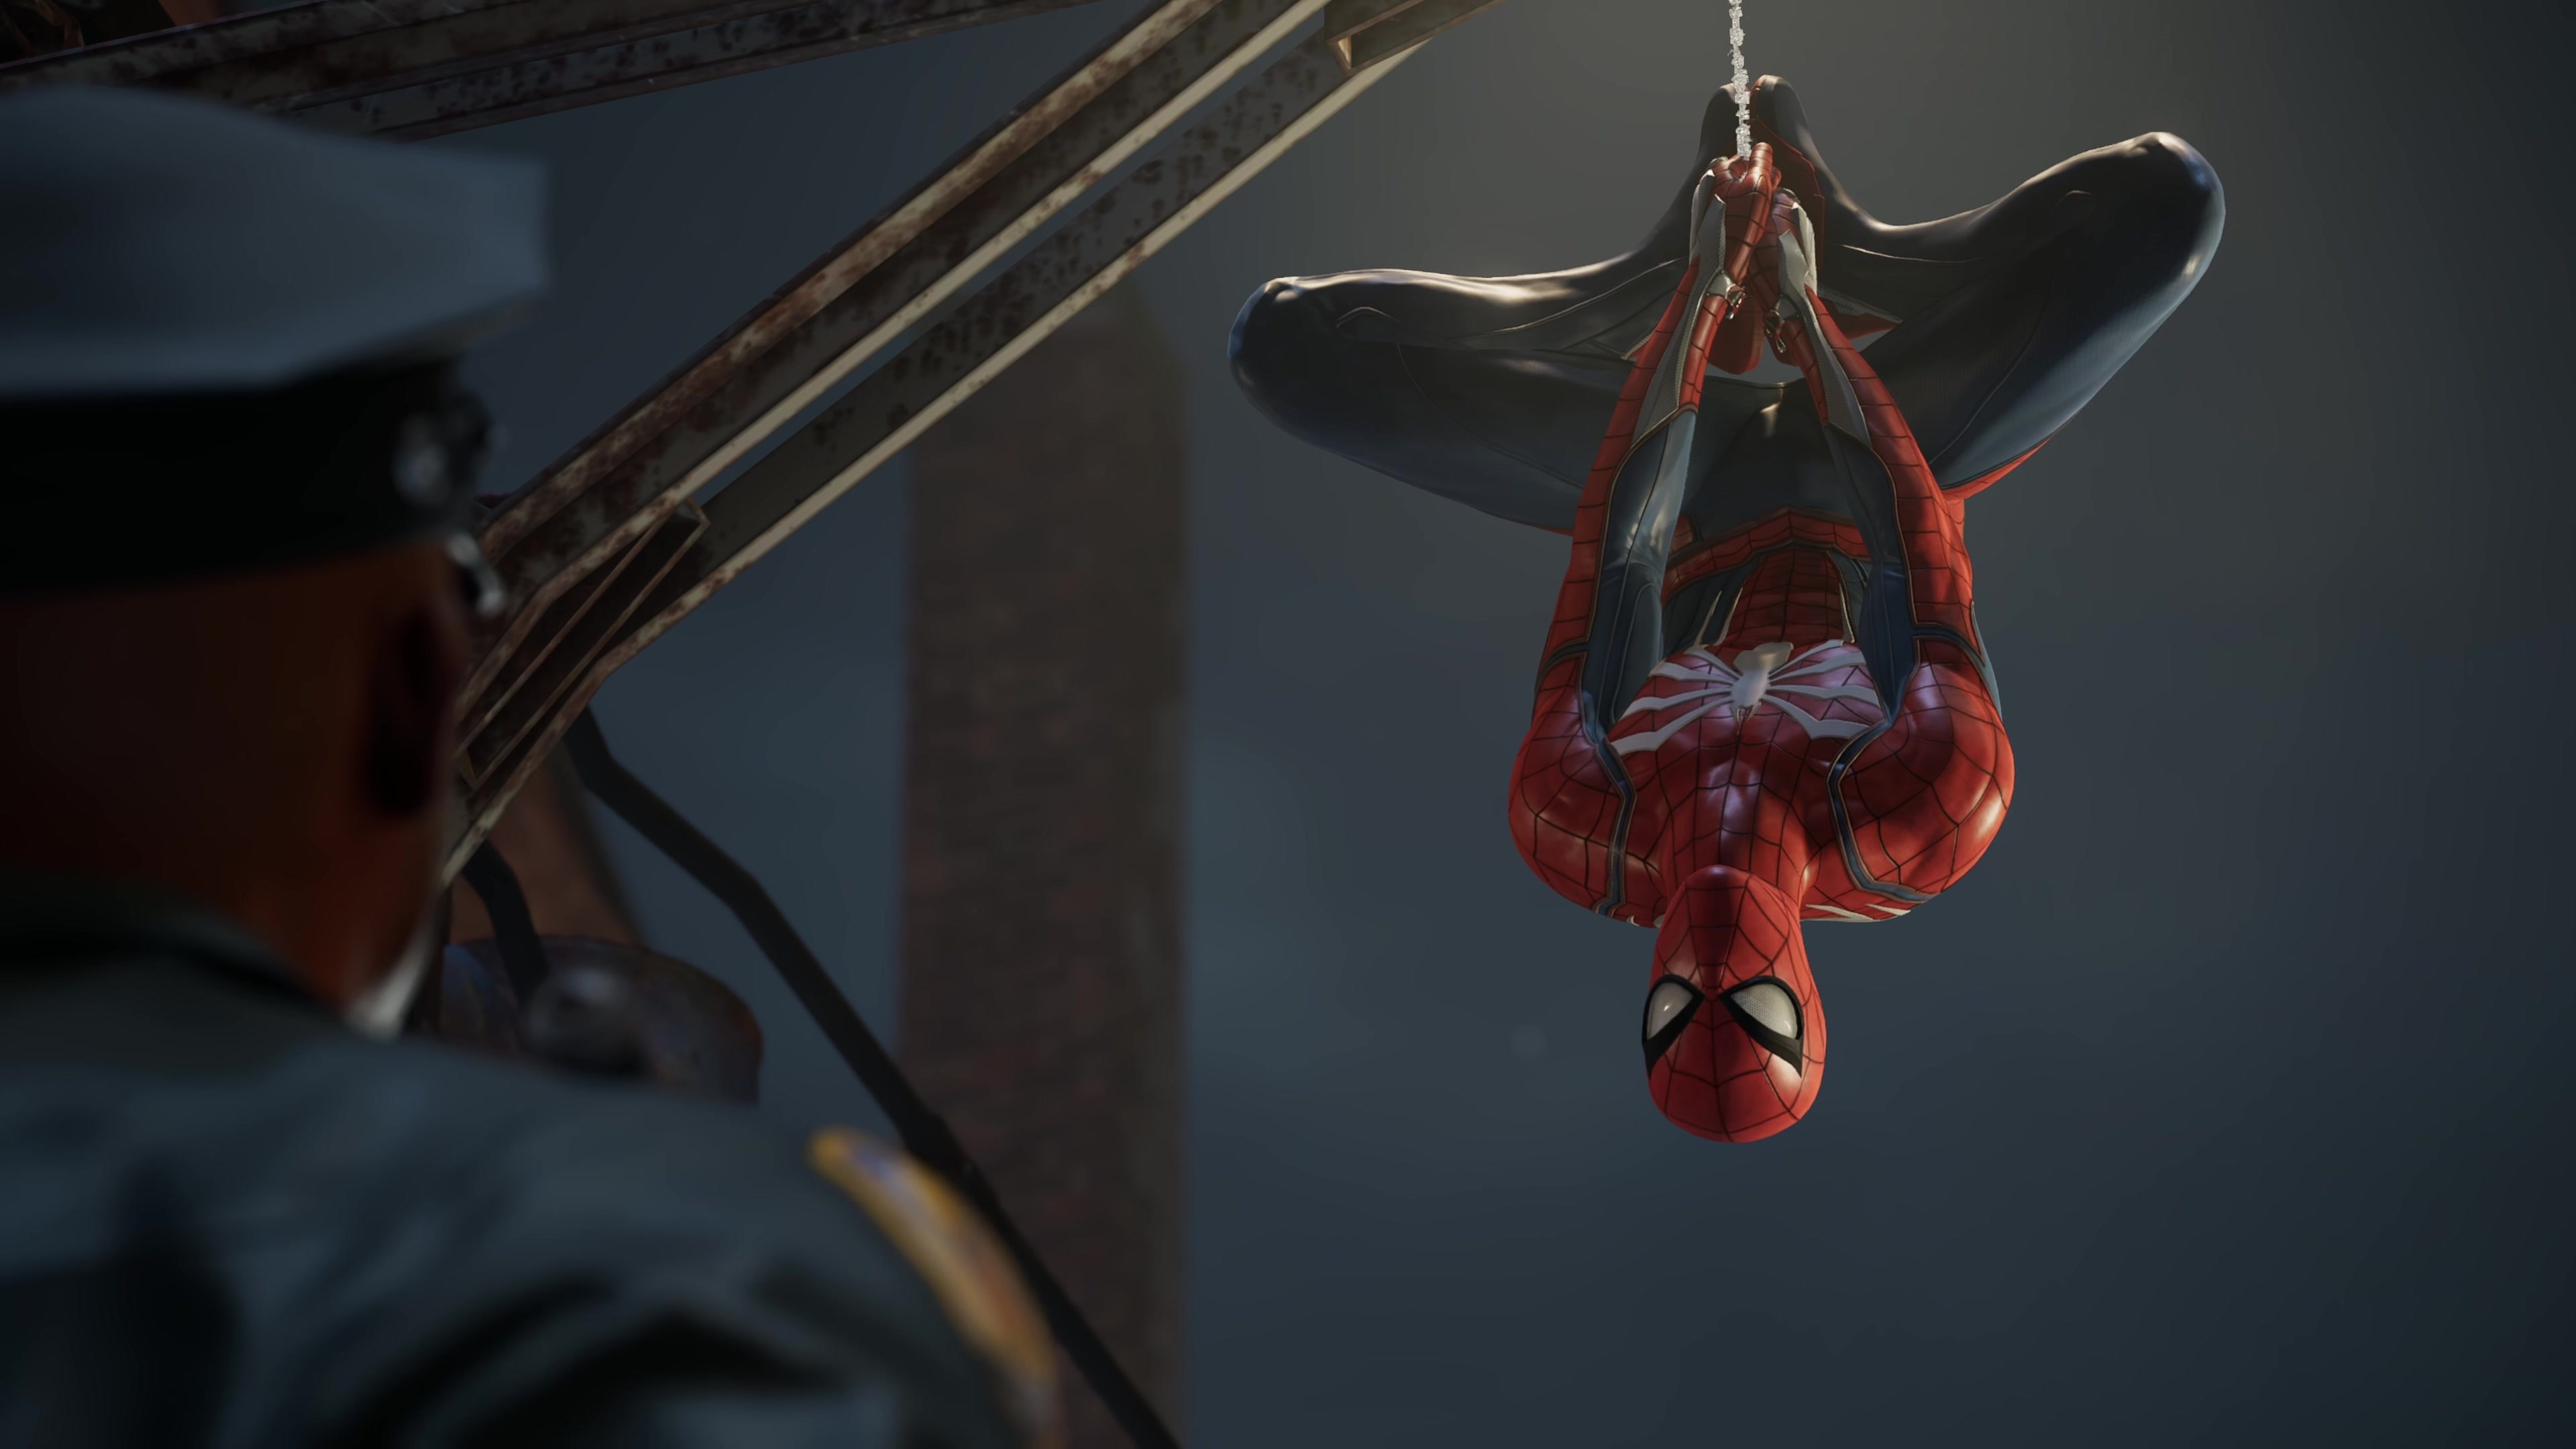 Wallpaper Marvels Spider Man E3 2018 screenshot 4K Games 19177